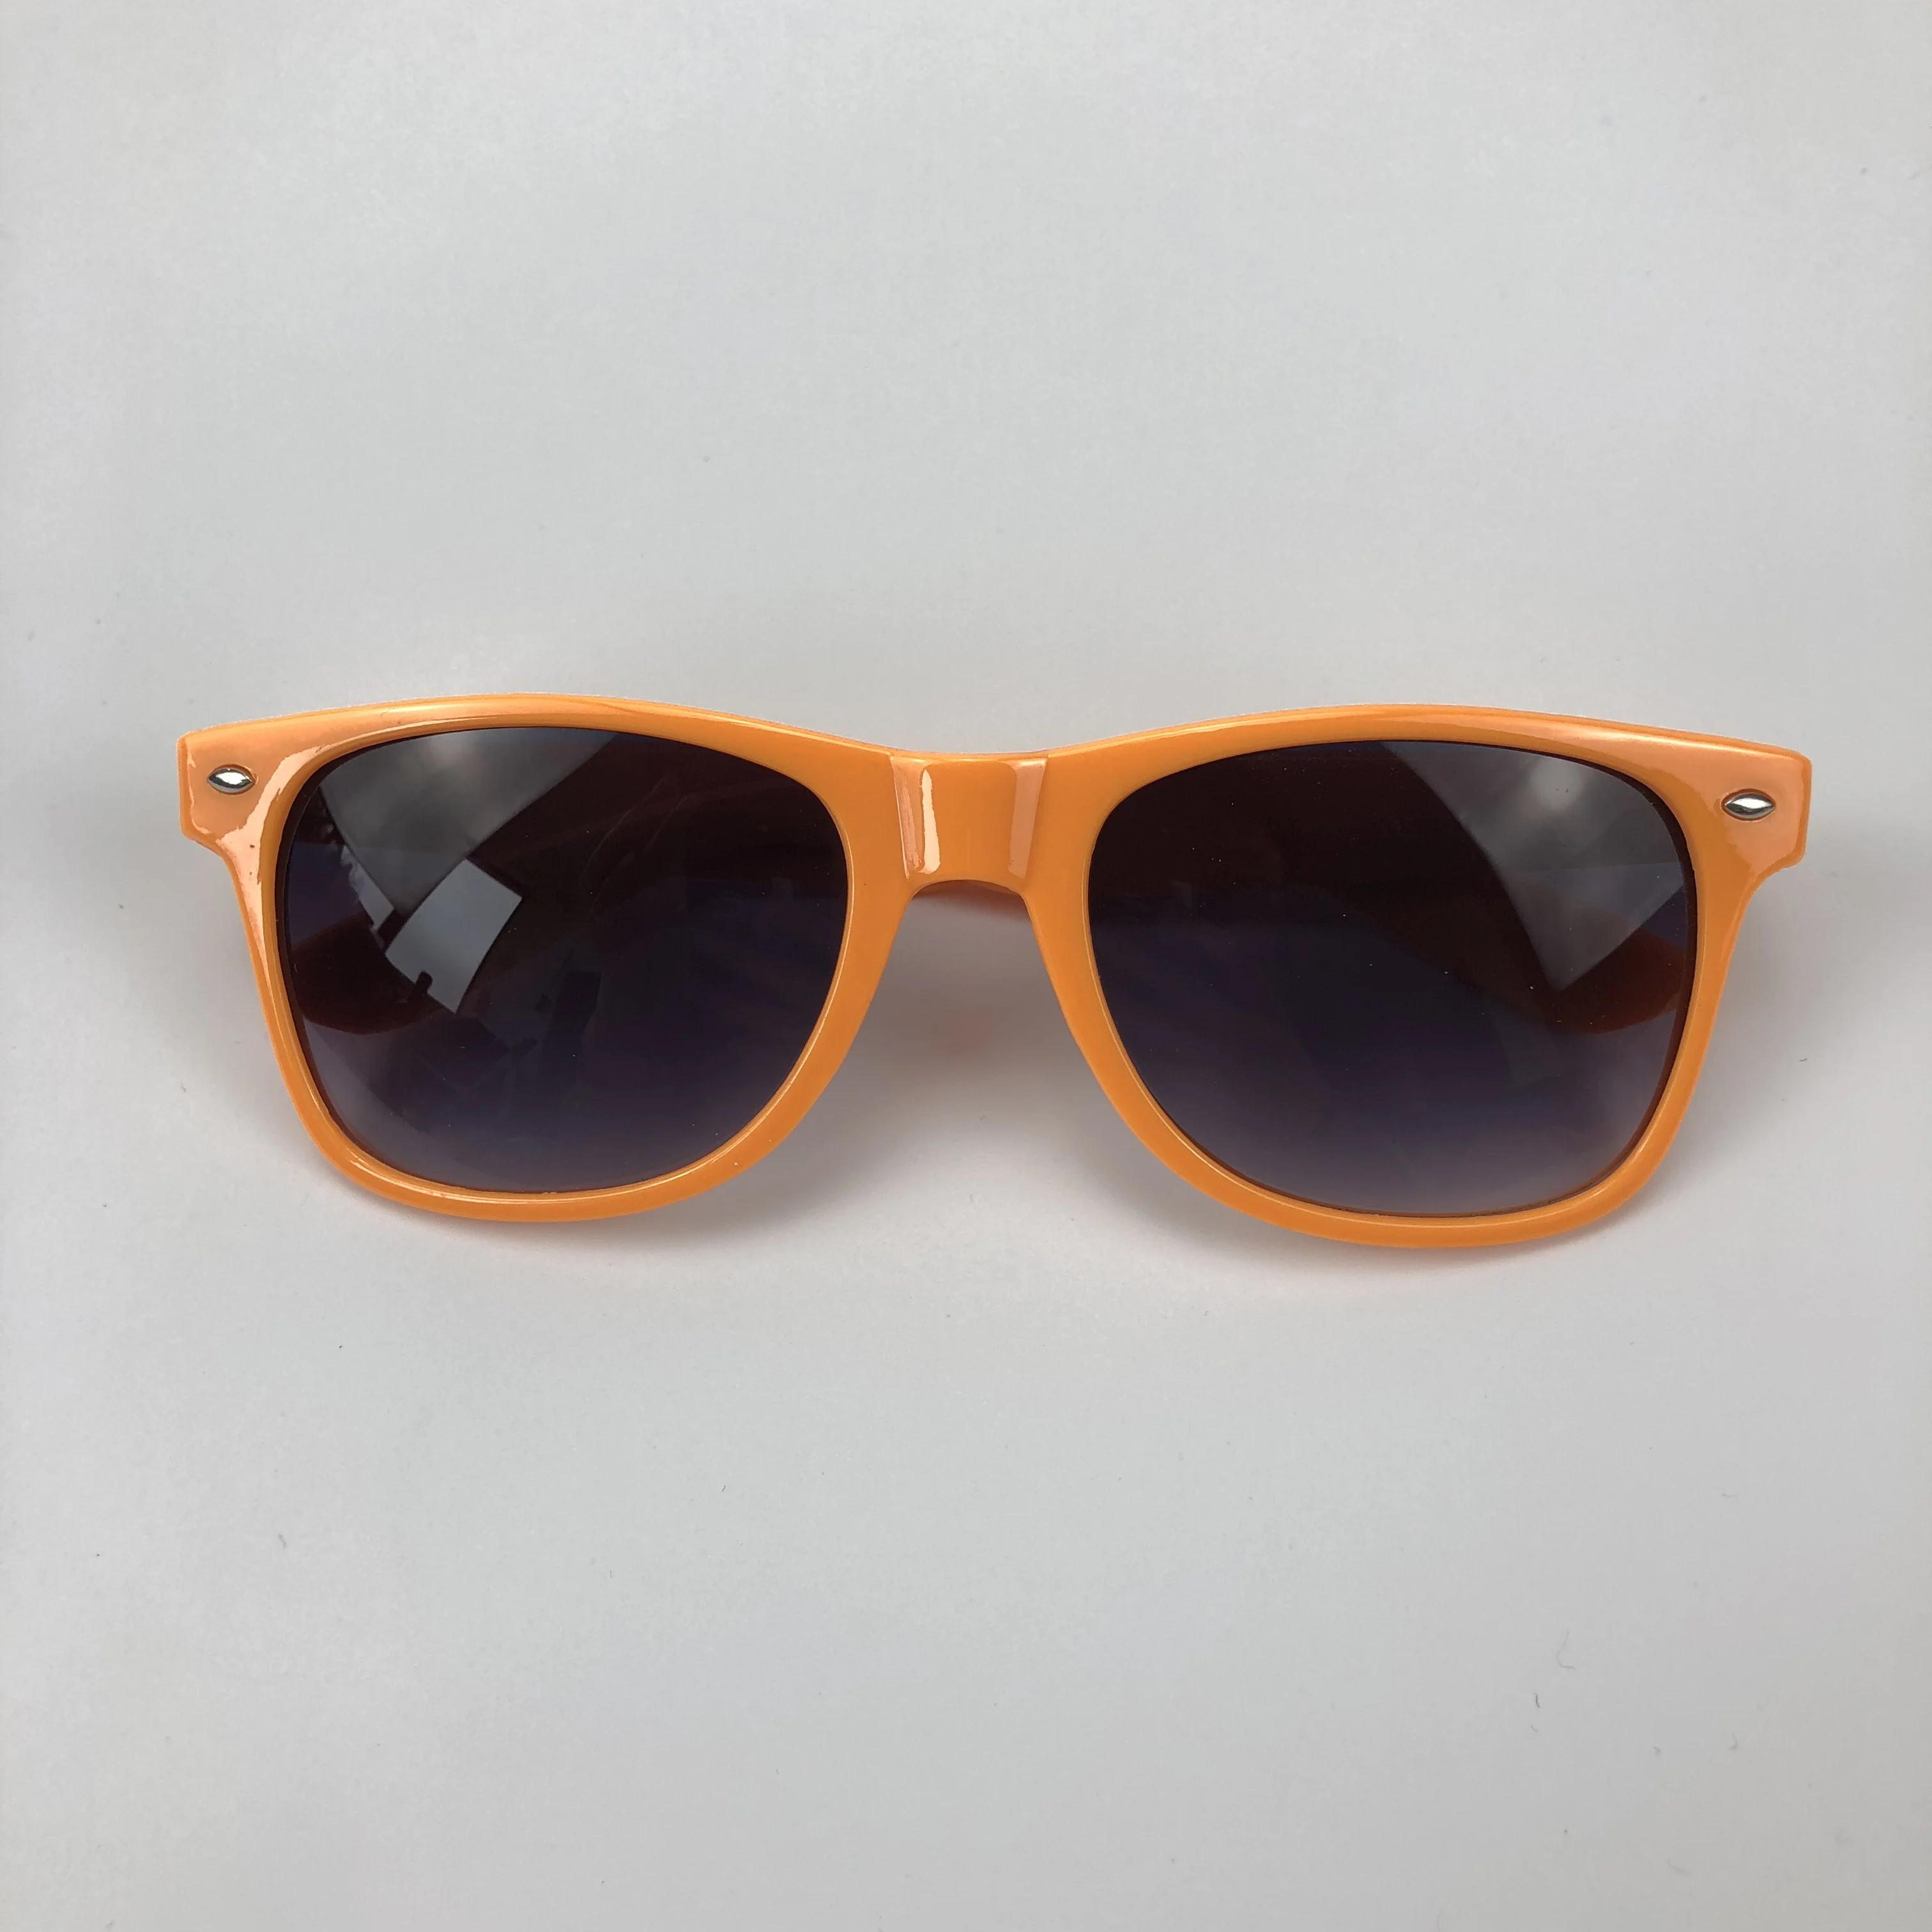 New Brand Customized Logo Pinhole Sunglasses For Sports Promotional